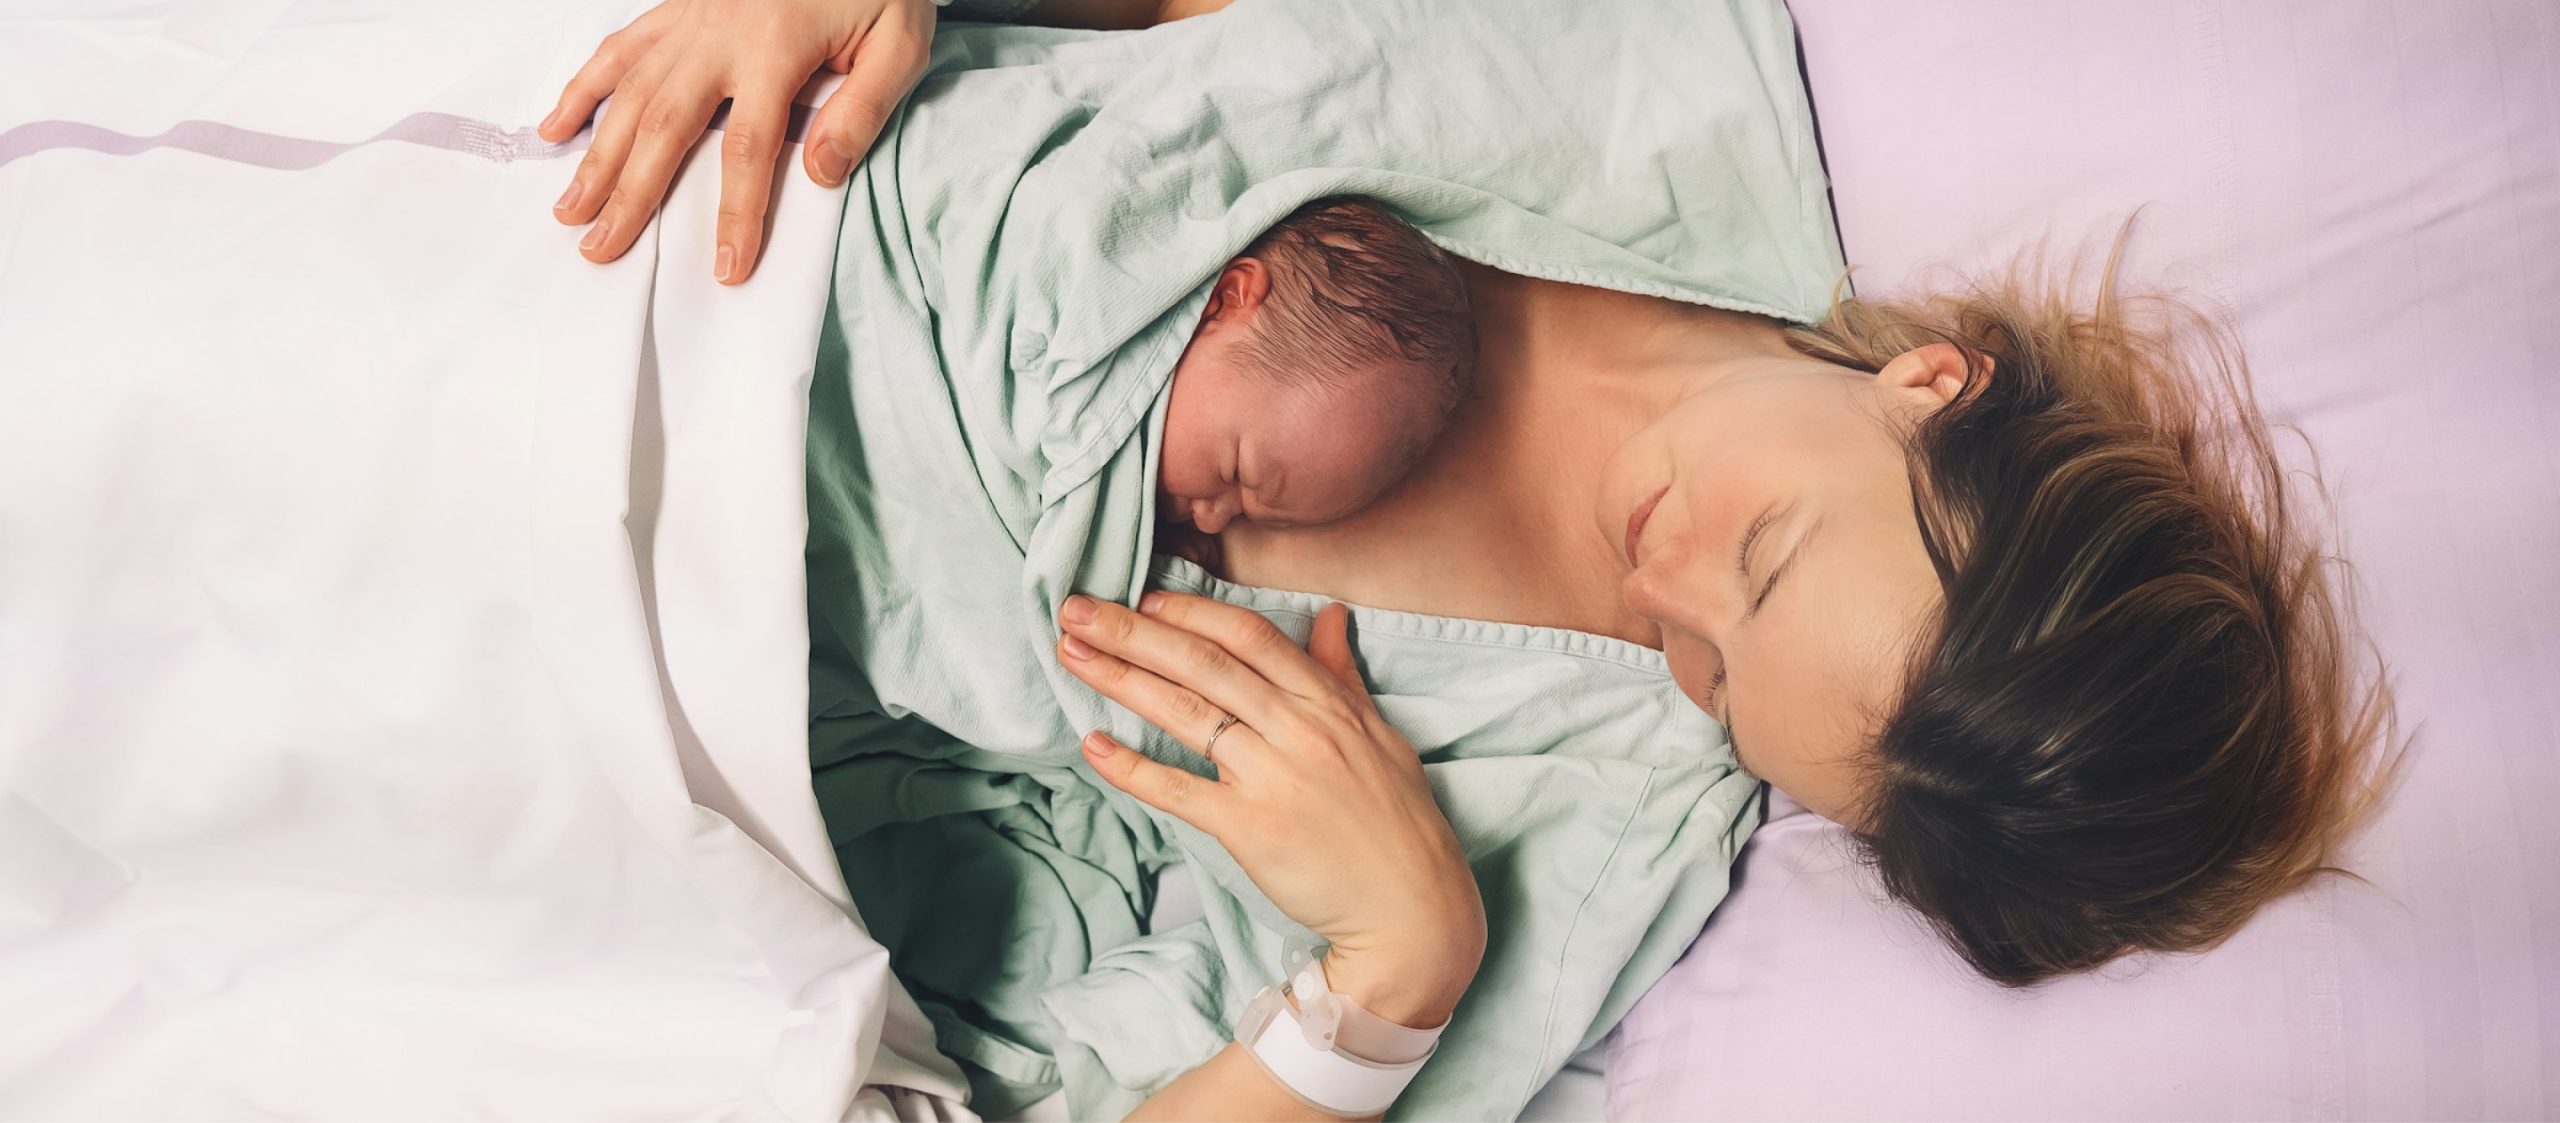 birth trauma hero, mother cradling baby